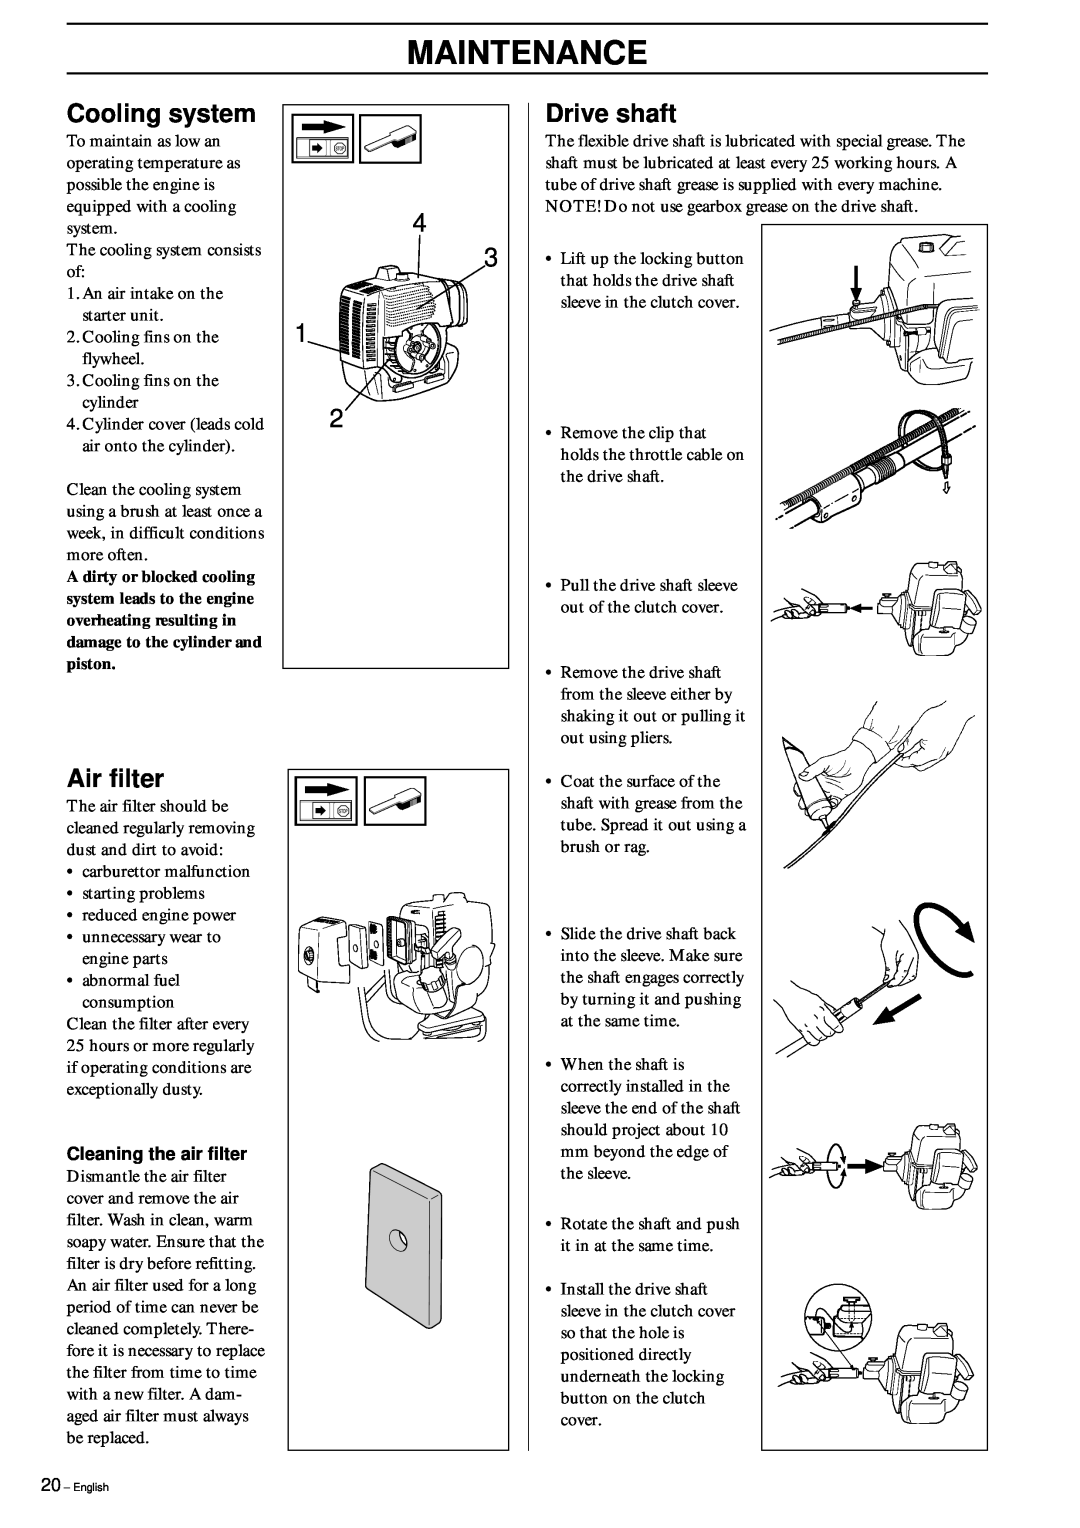 Husqvarna 152RB manual Cooling system, Drive shaft, Air filter, Maintenance 